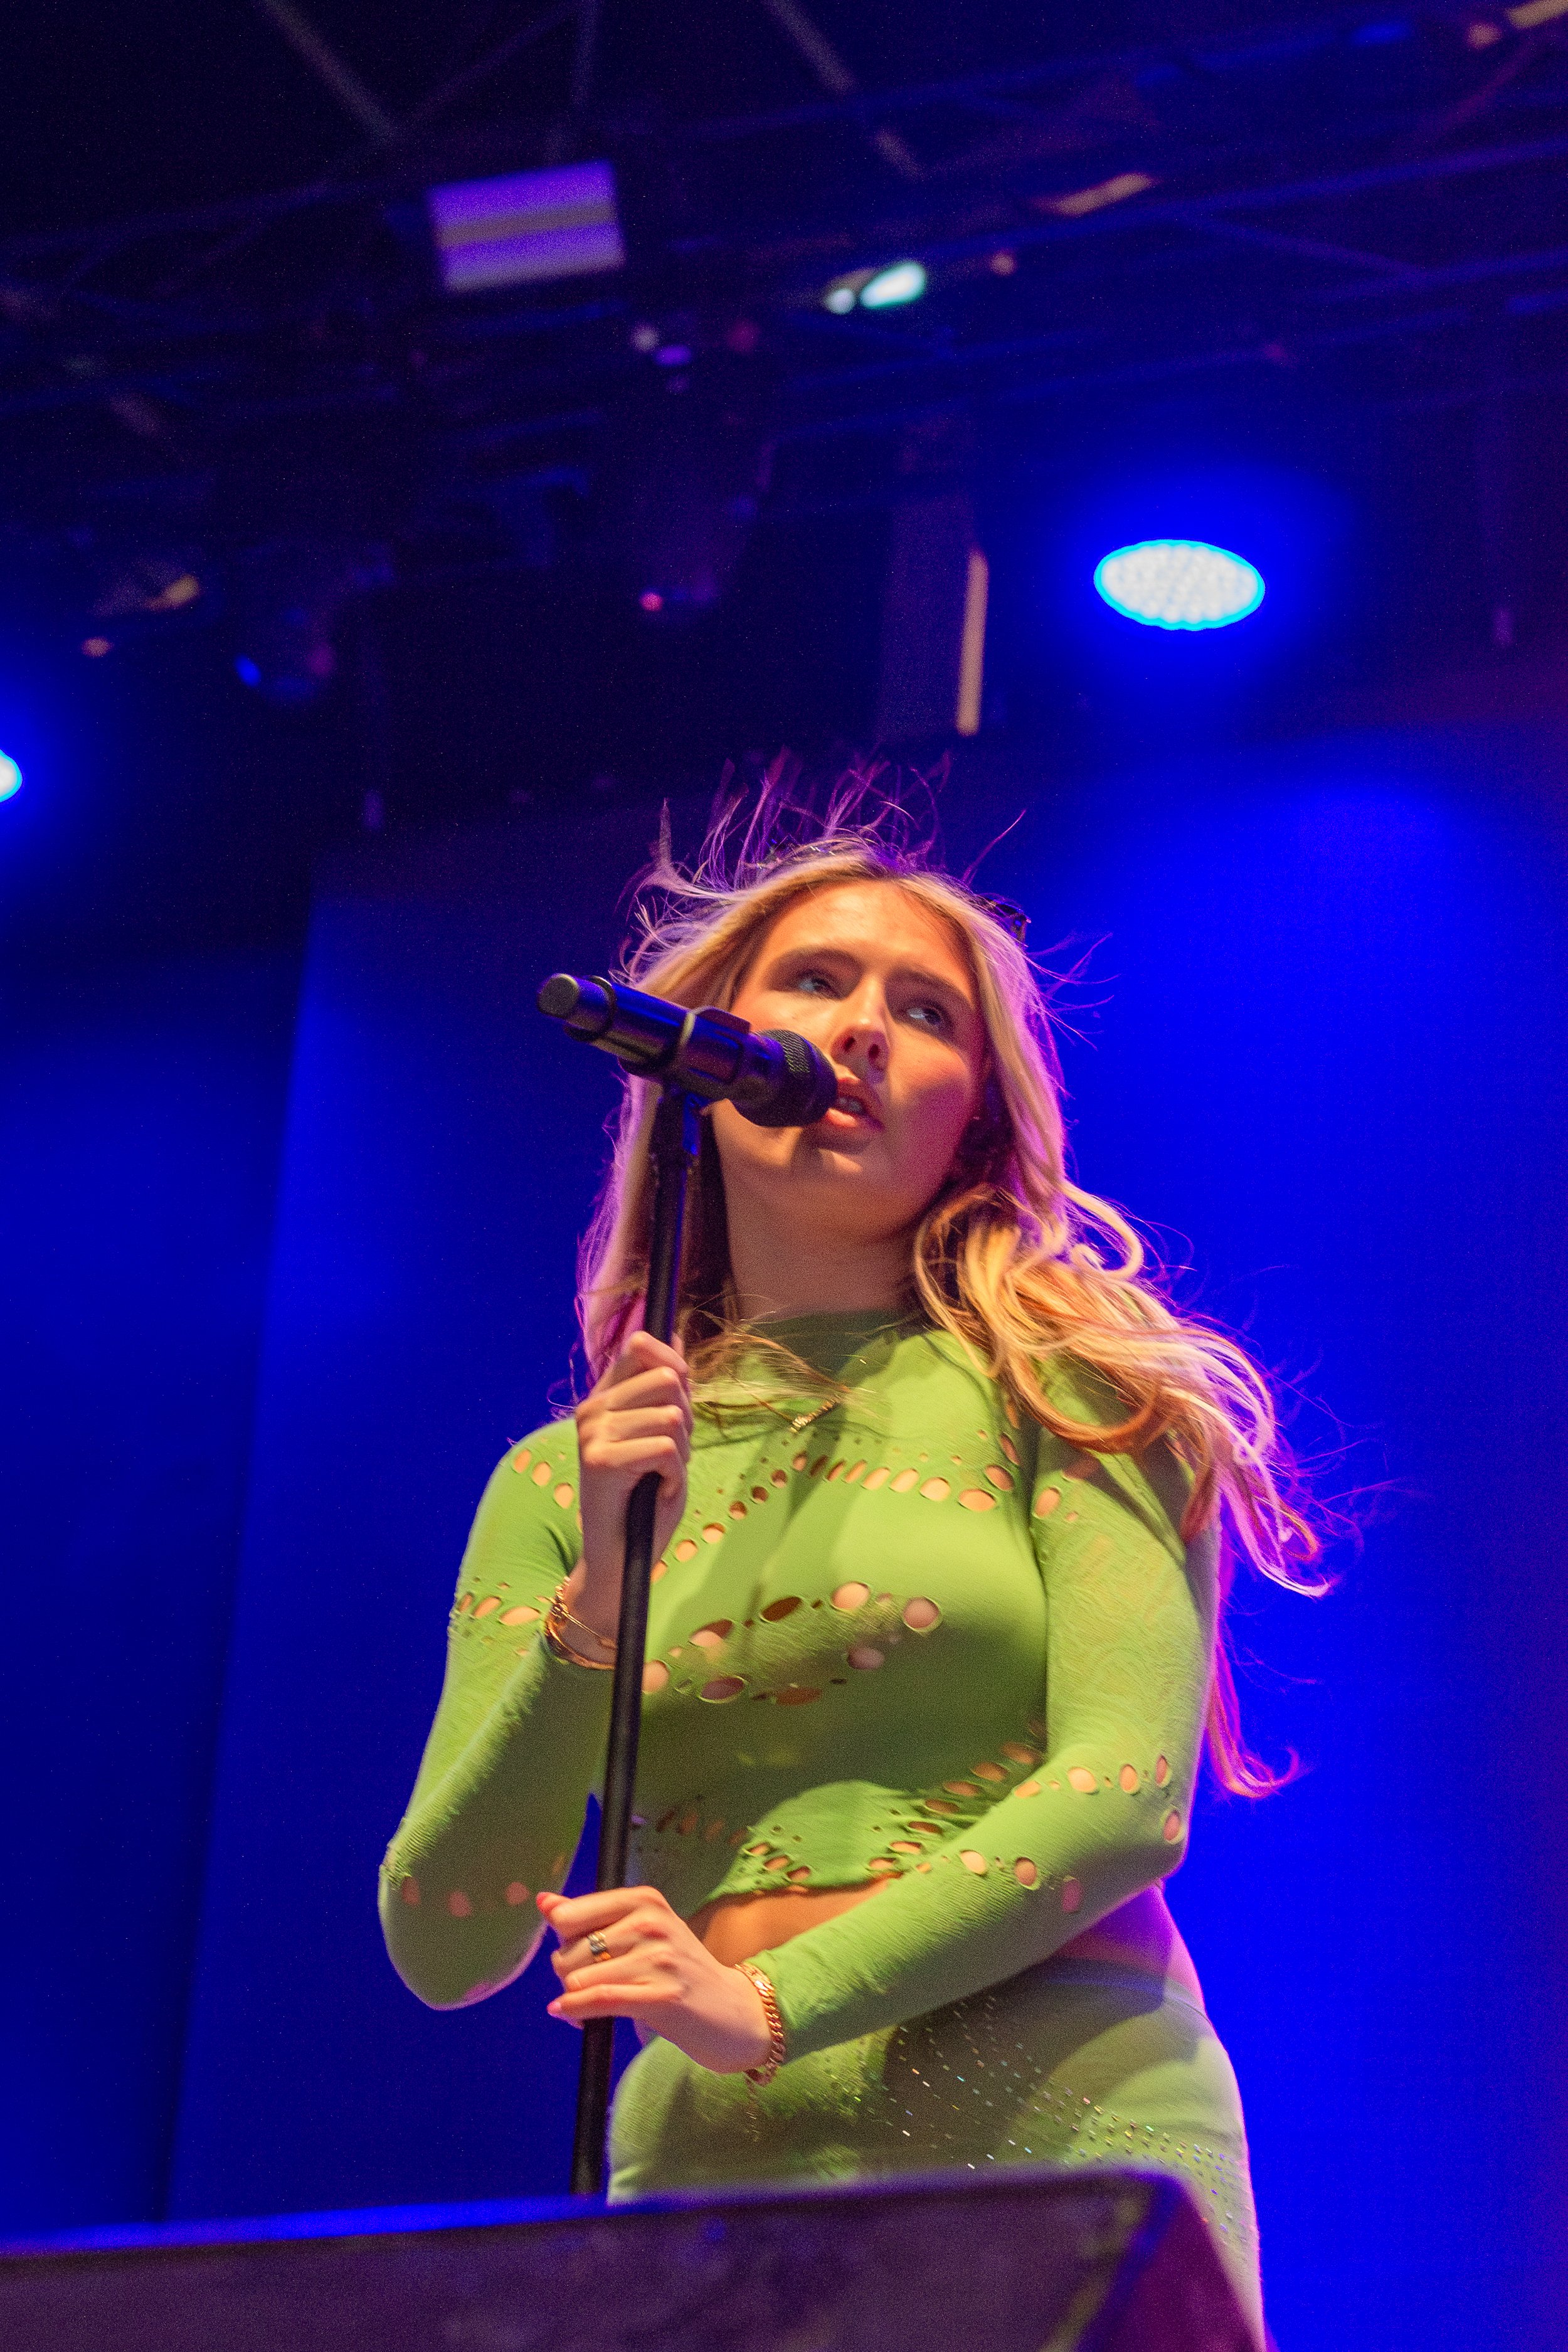   Pop artist Mimi Webb performs singles like “Dumb Love” and songs from her debut album,  Amelia . 